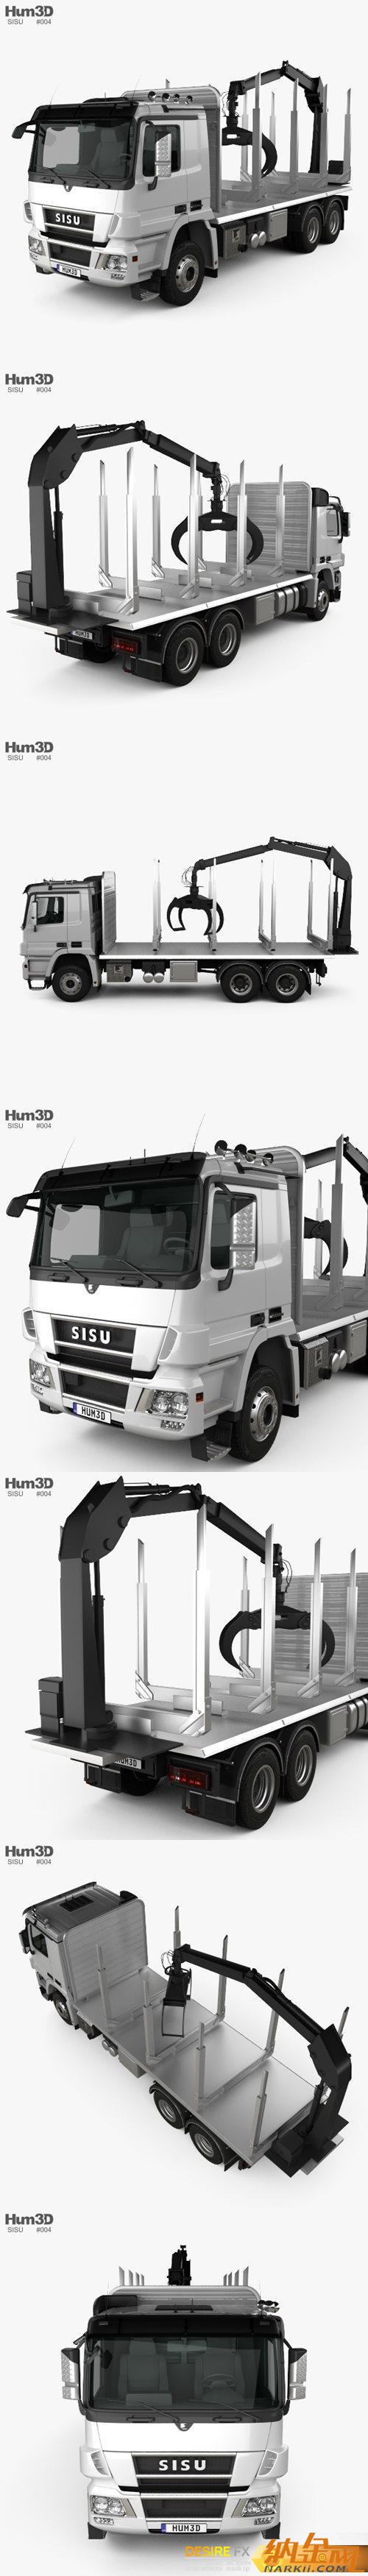 Sisu-Polar-Logging-Truck-2010-3D-Model.jpg